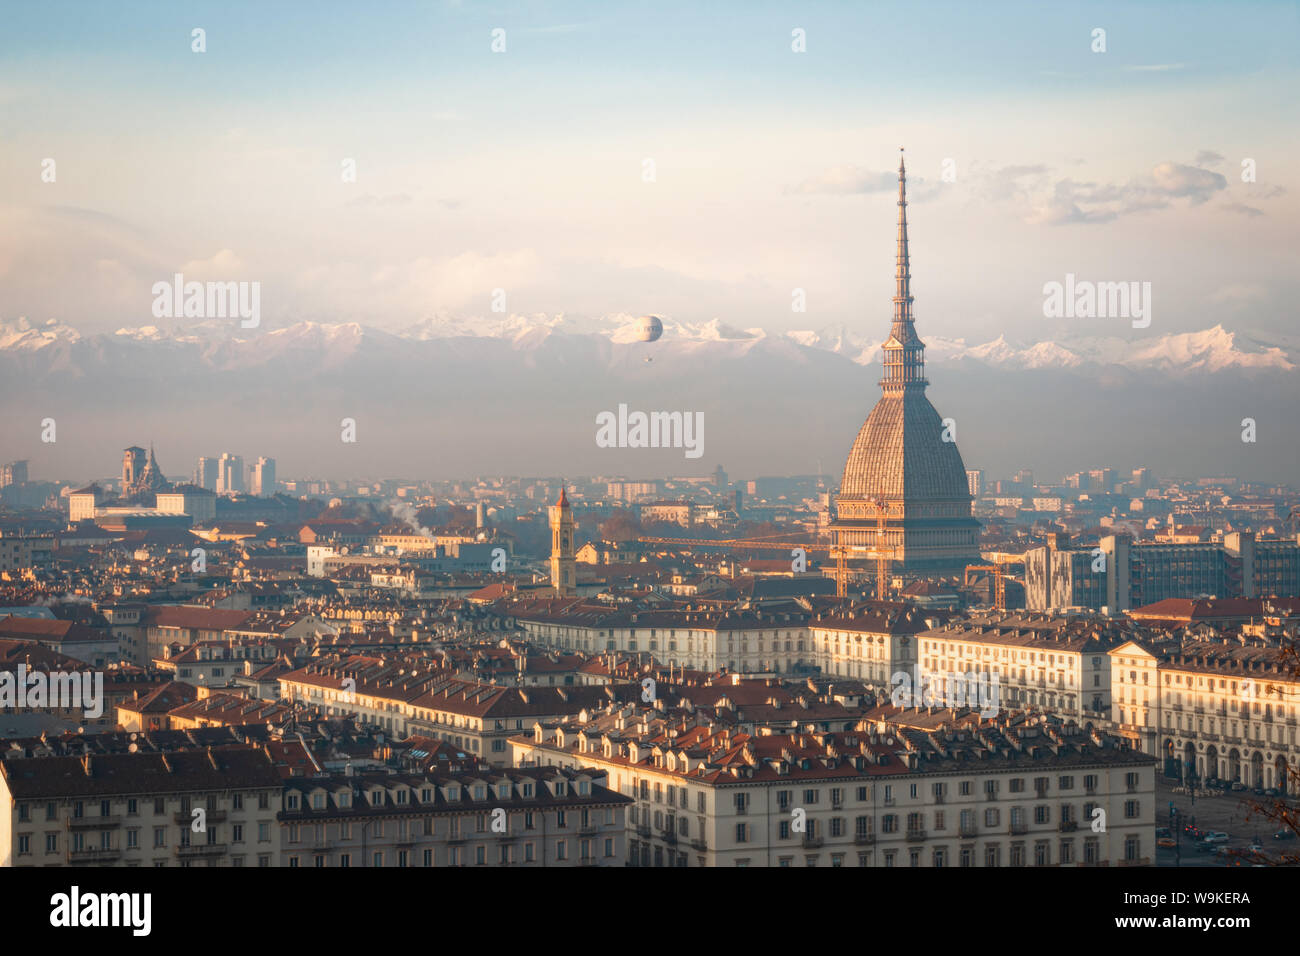 Panoramablick auf die Mole Antonelliana Turm in Turin Italien von Monte dei Cappuccini. Torino Italia. Blick auf den Fluss Fiume po' und die gesamte Stadt. Stockfoto